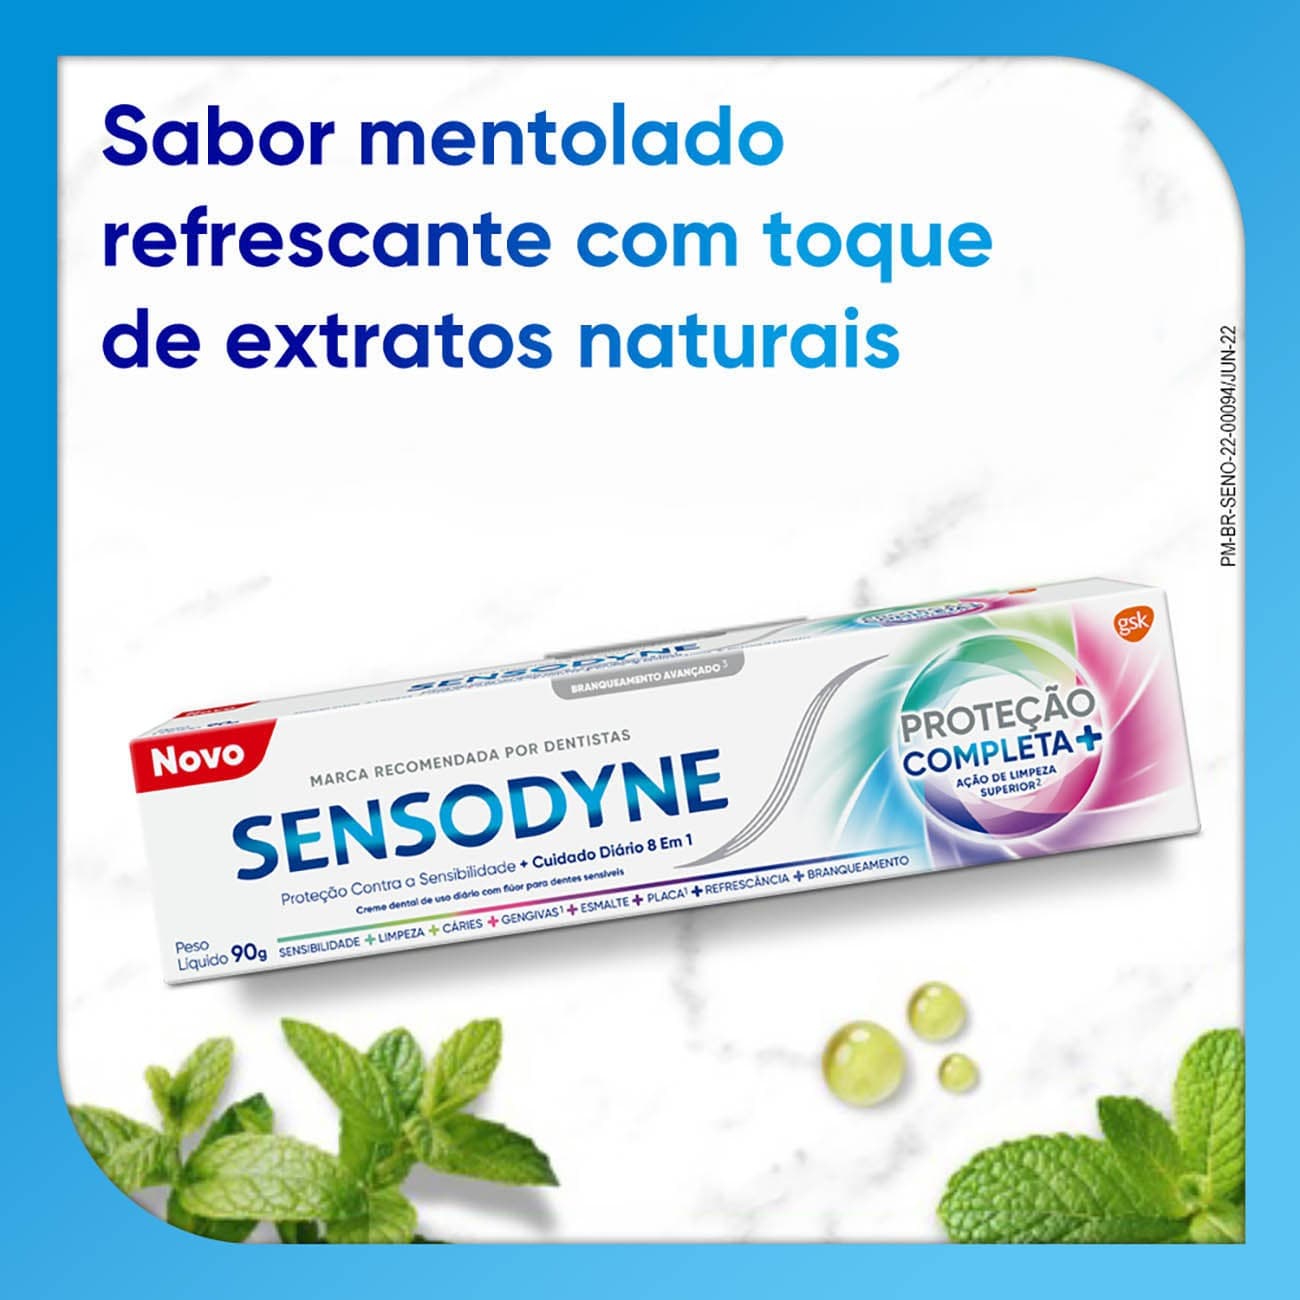 Sensodyne Proteo Completa+ Creme Dental 90g